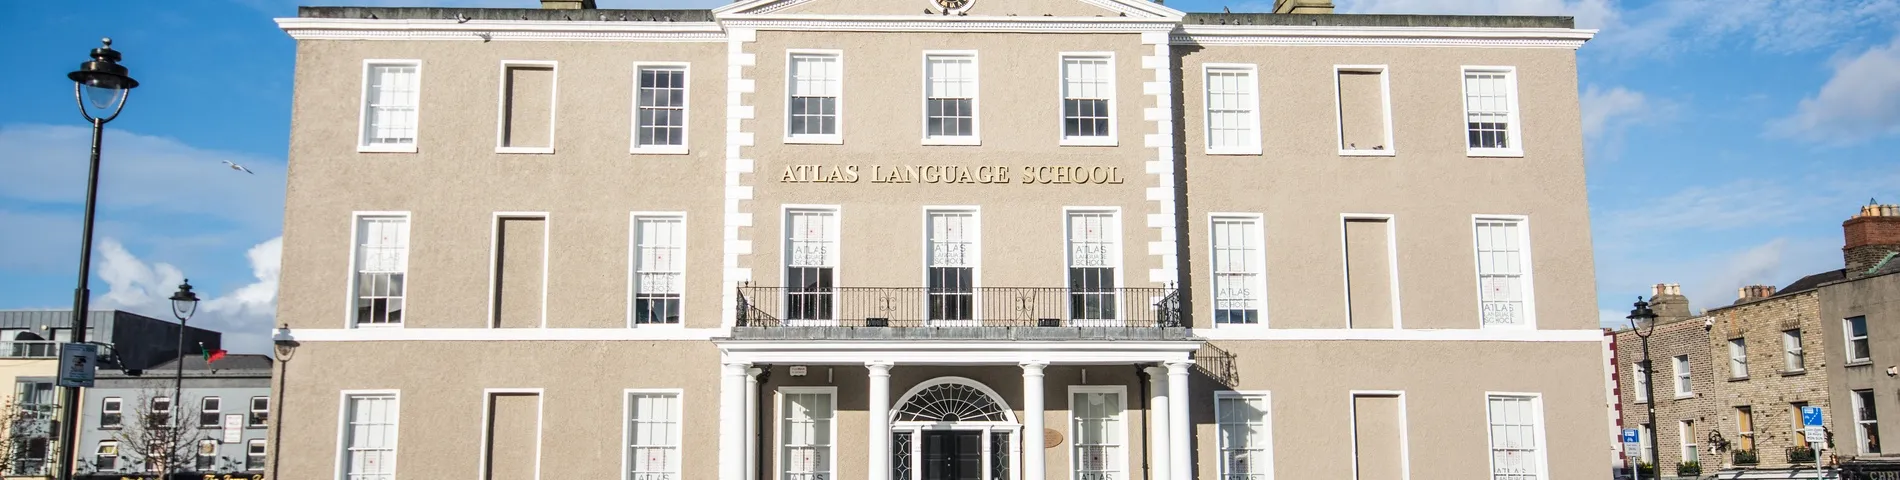 Atlas Language School bild 1